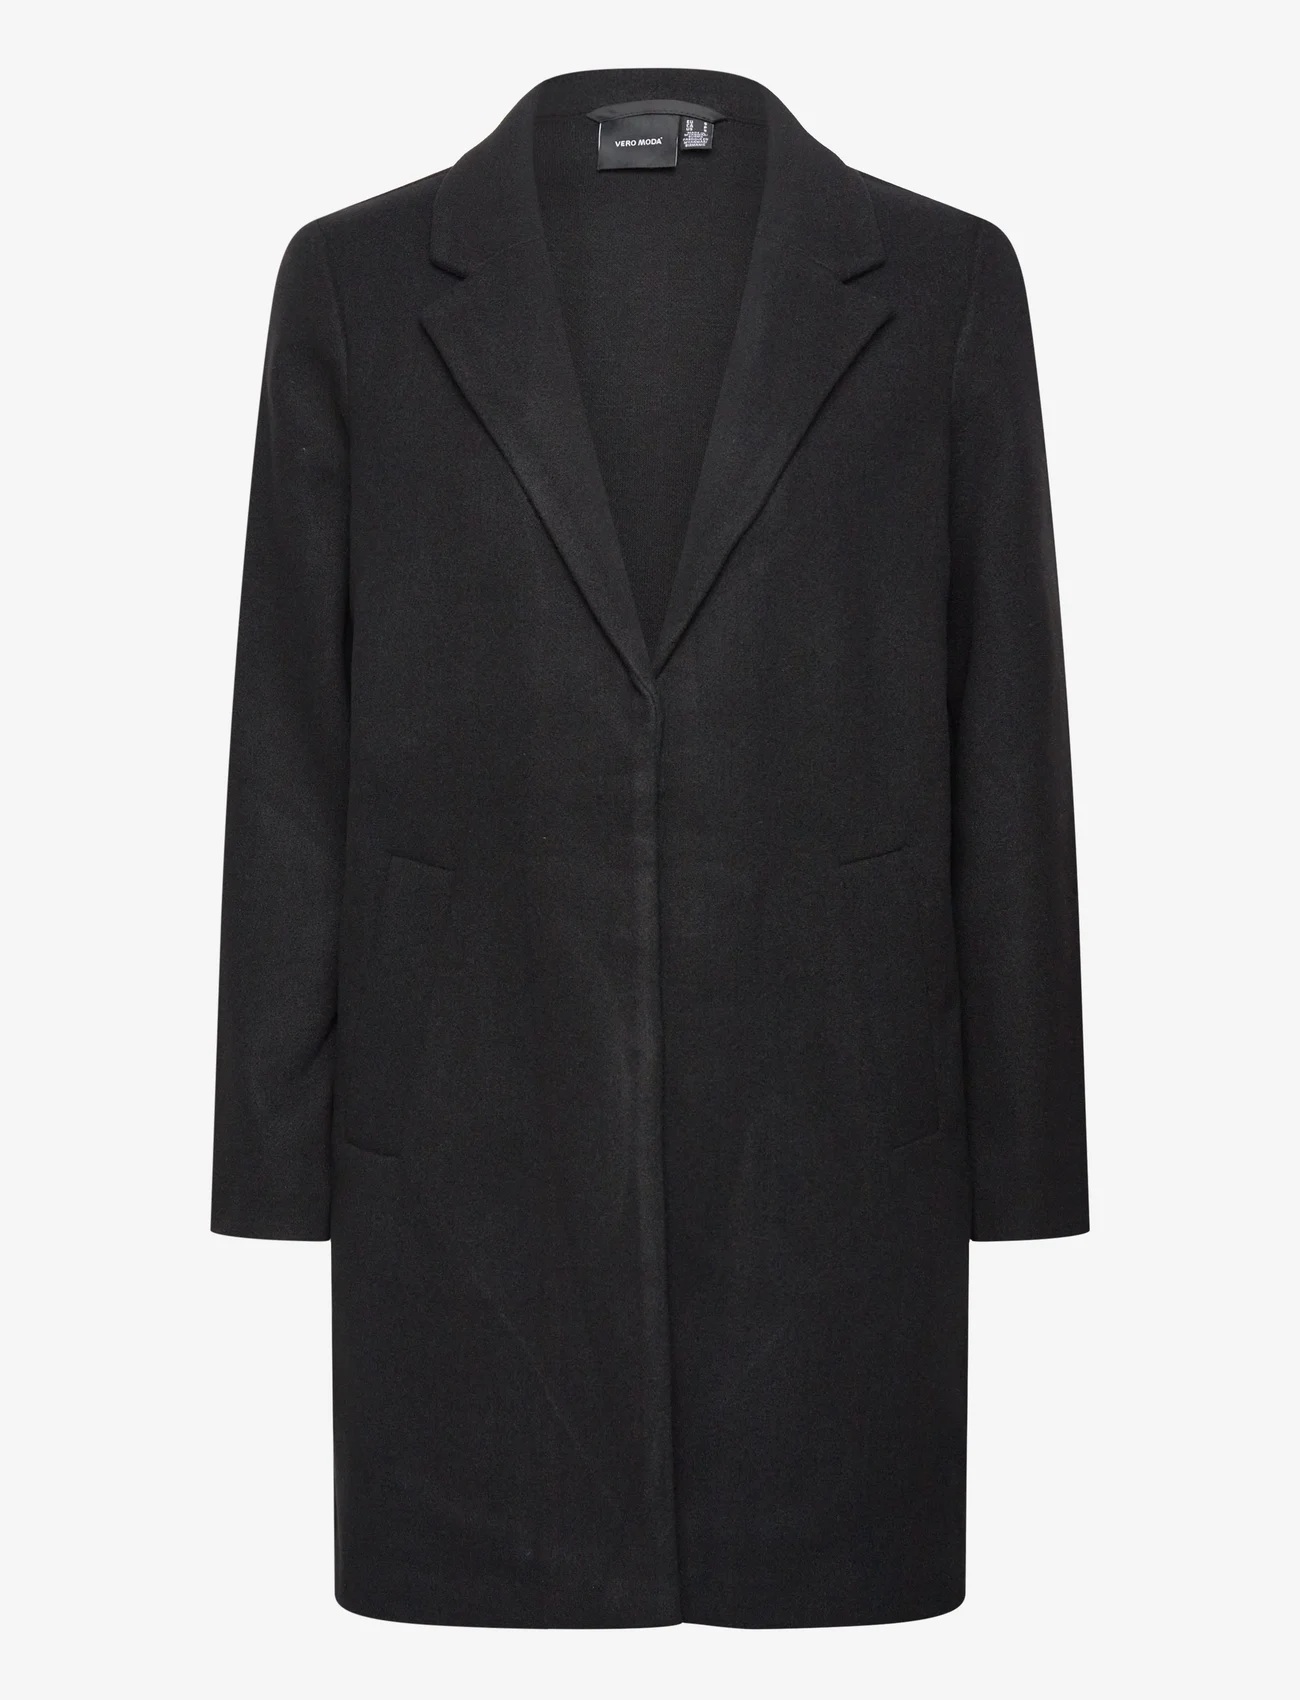 Vero Moda - VMPOP COAT NOOS - winter coats - black - 0